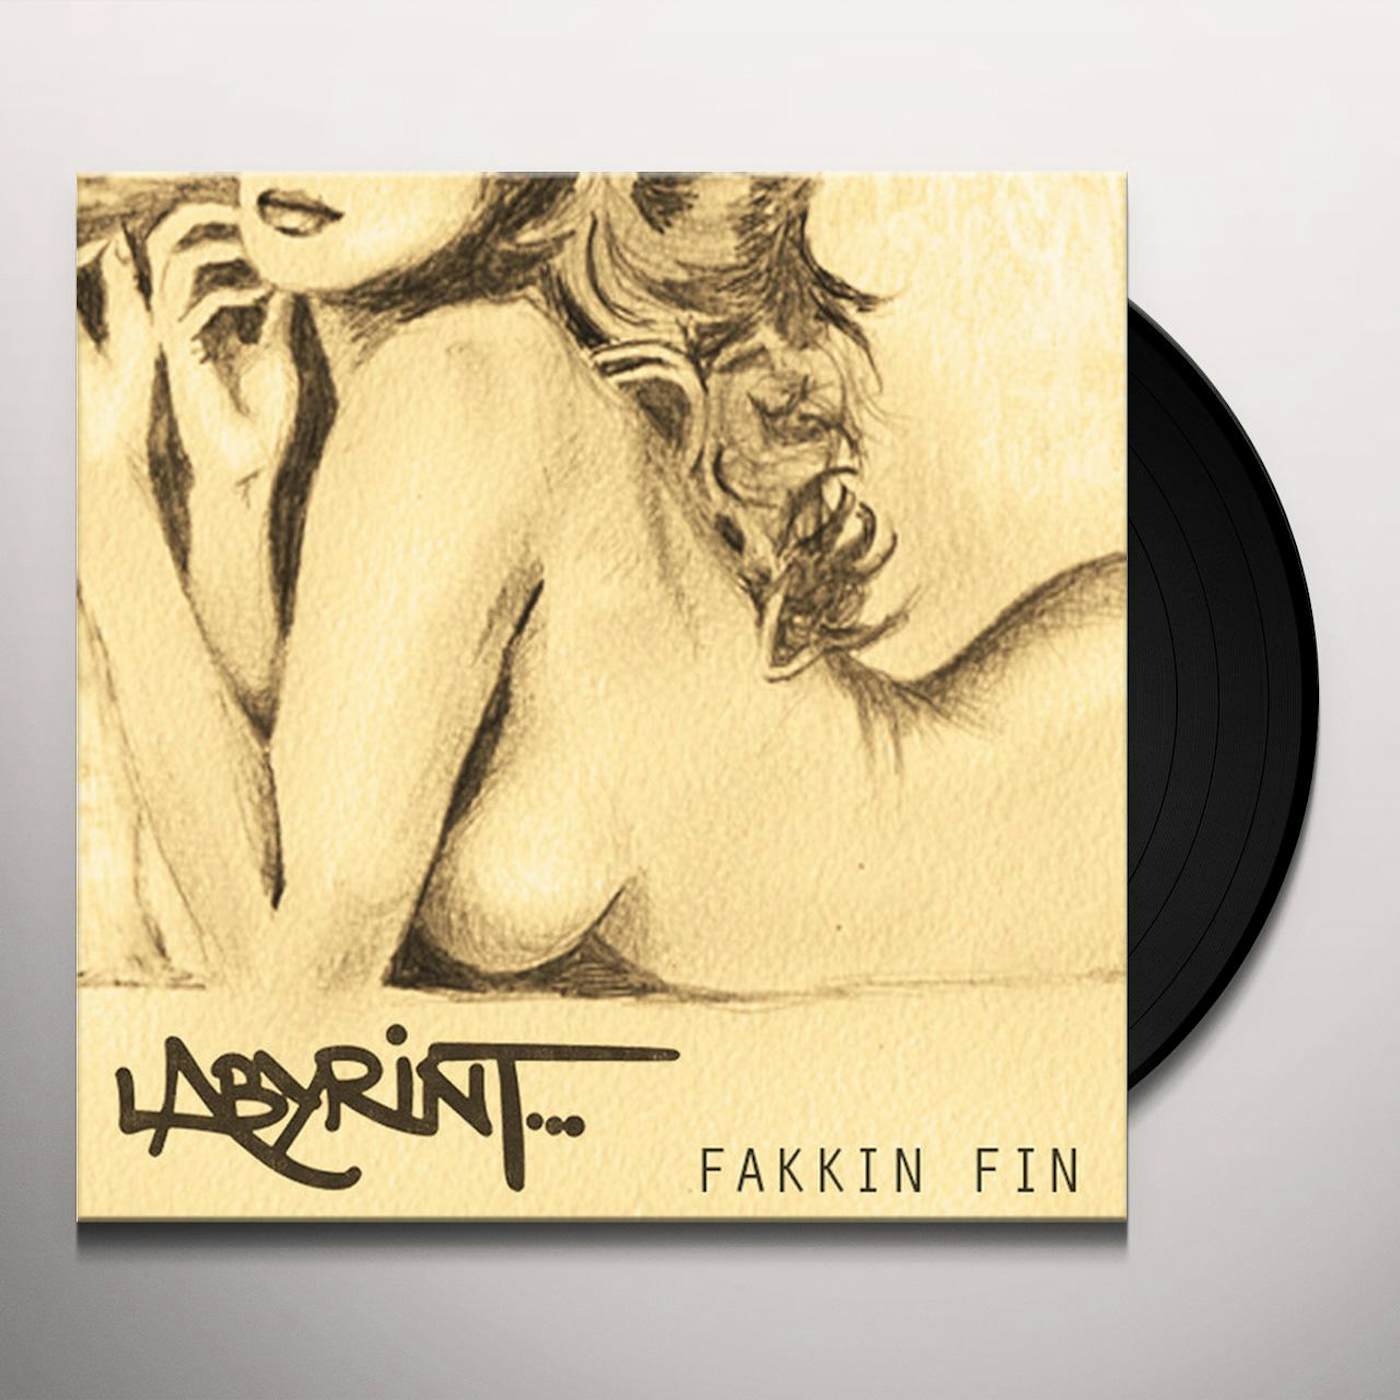 Labyrint Fakkin fin Vinyl Record